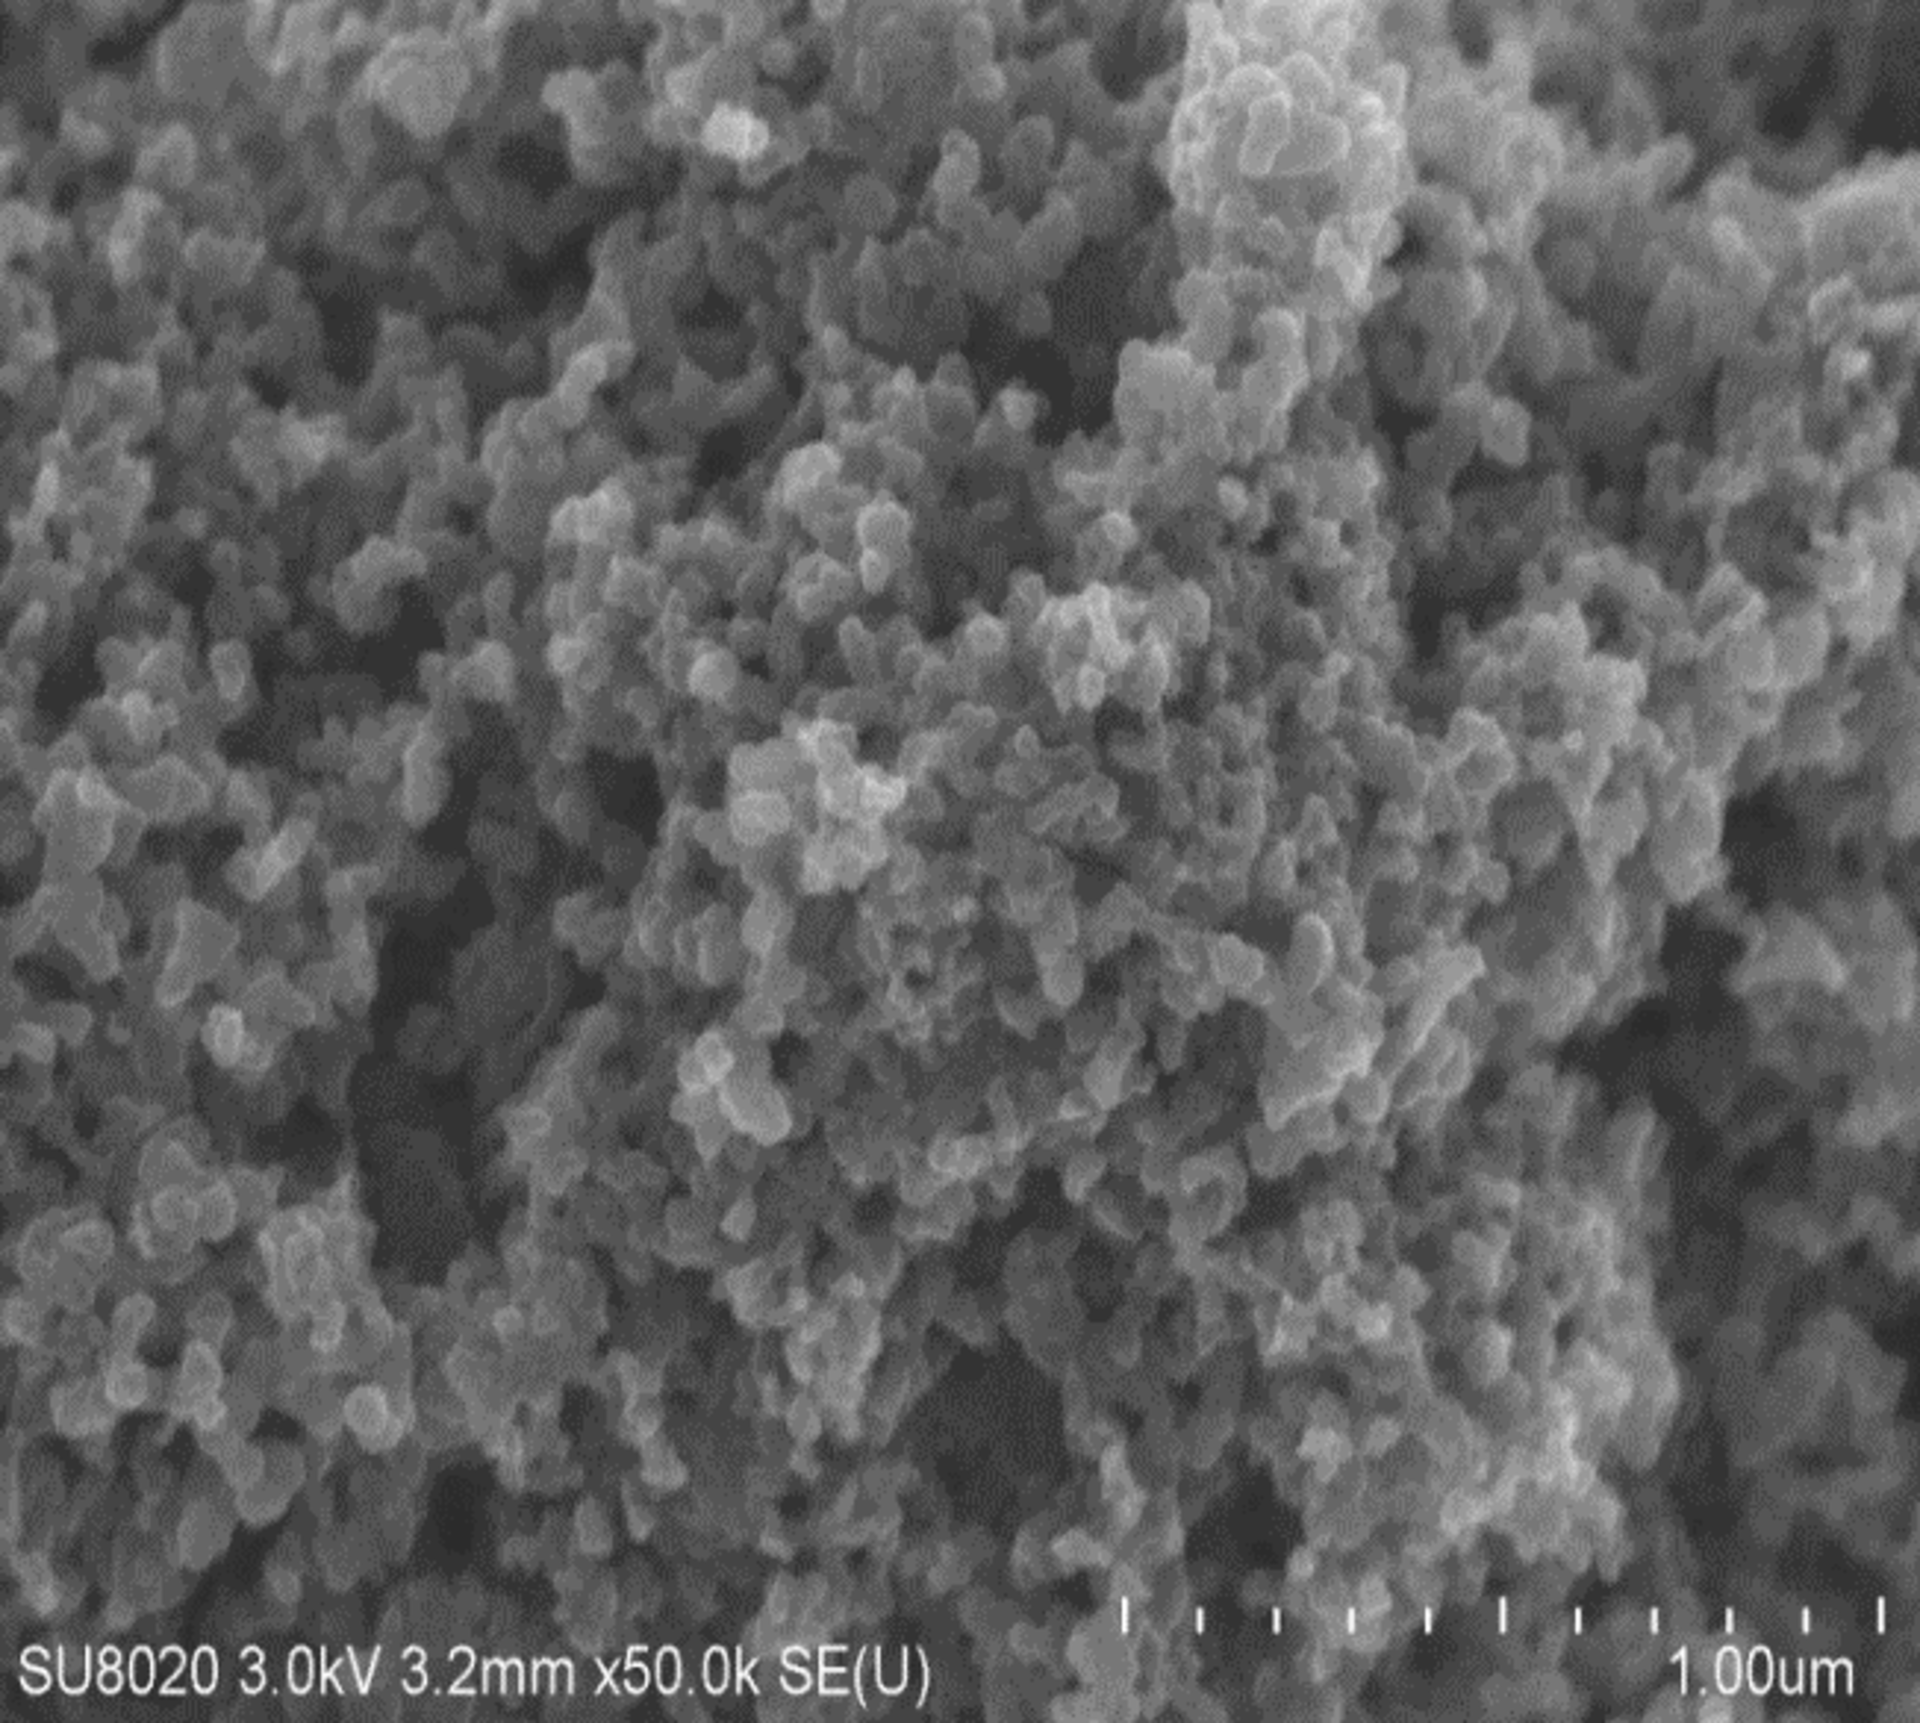 Microscope image sol-gel